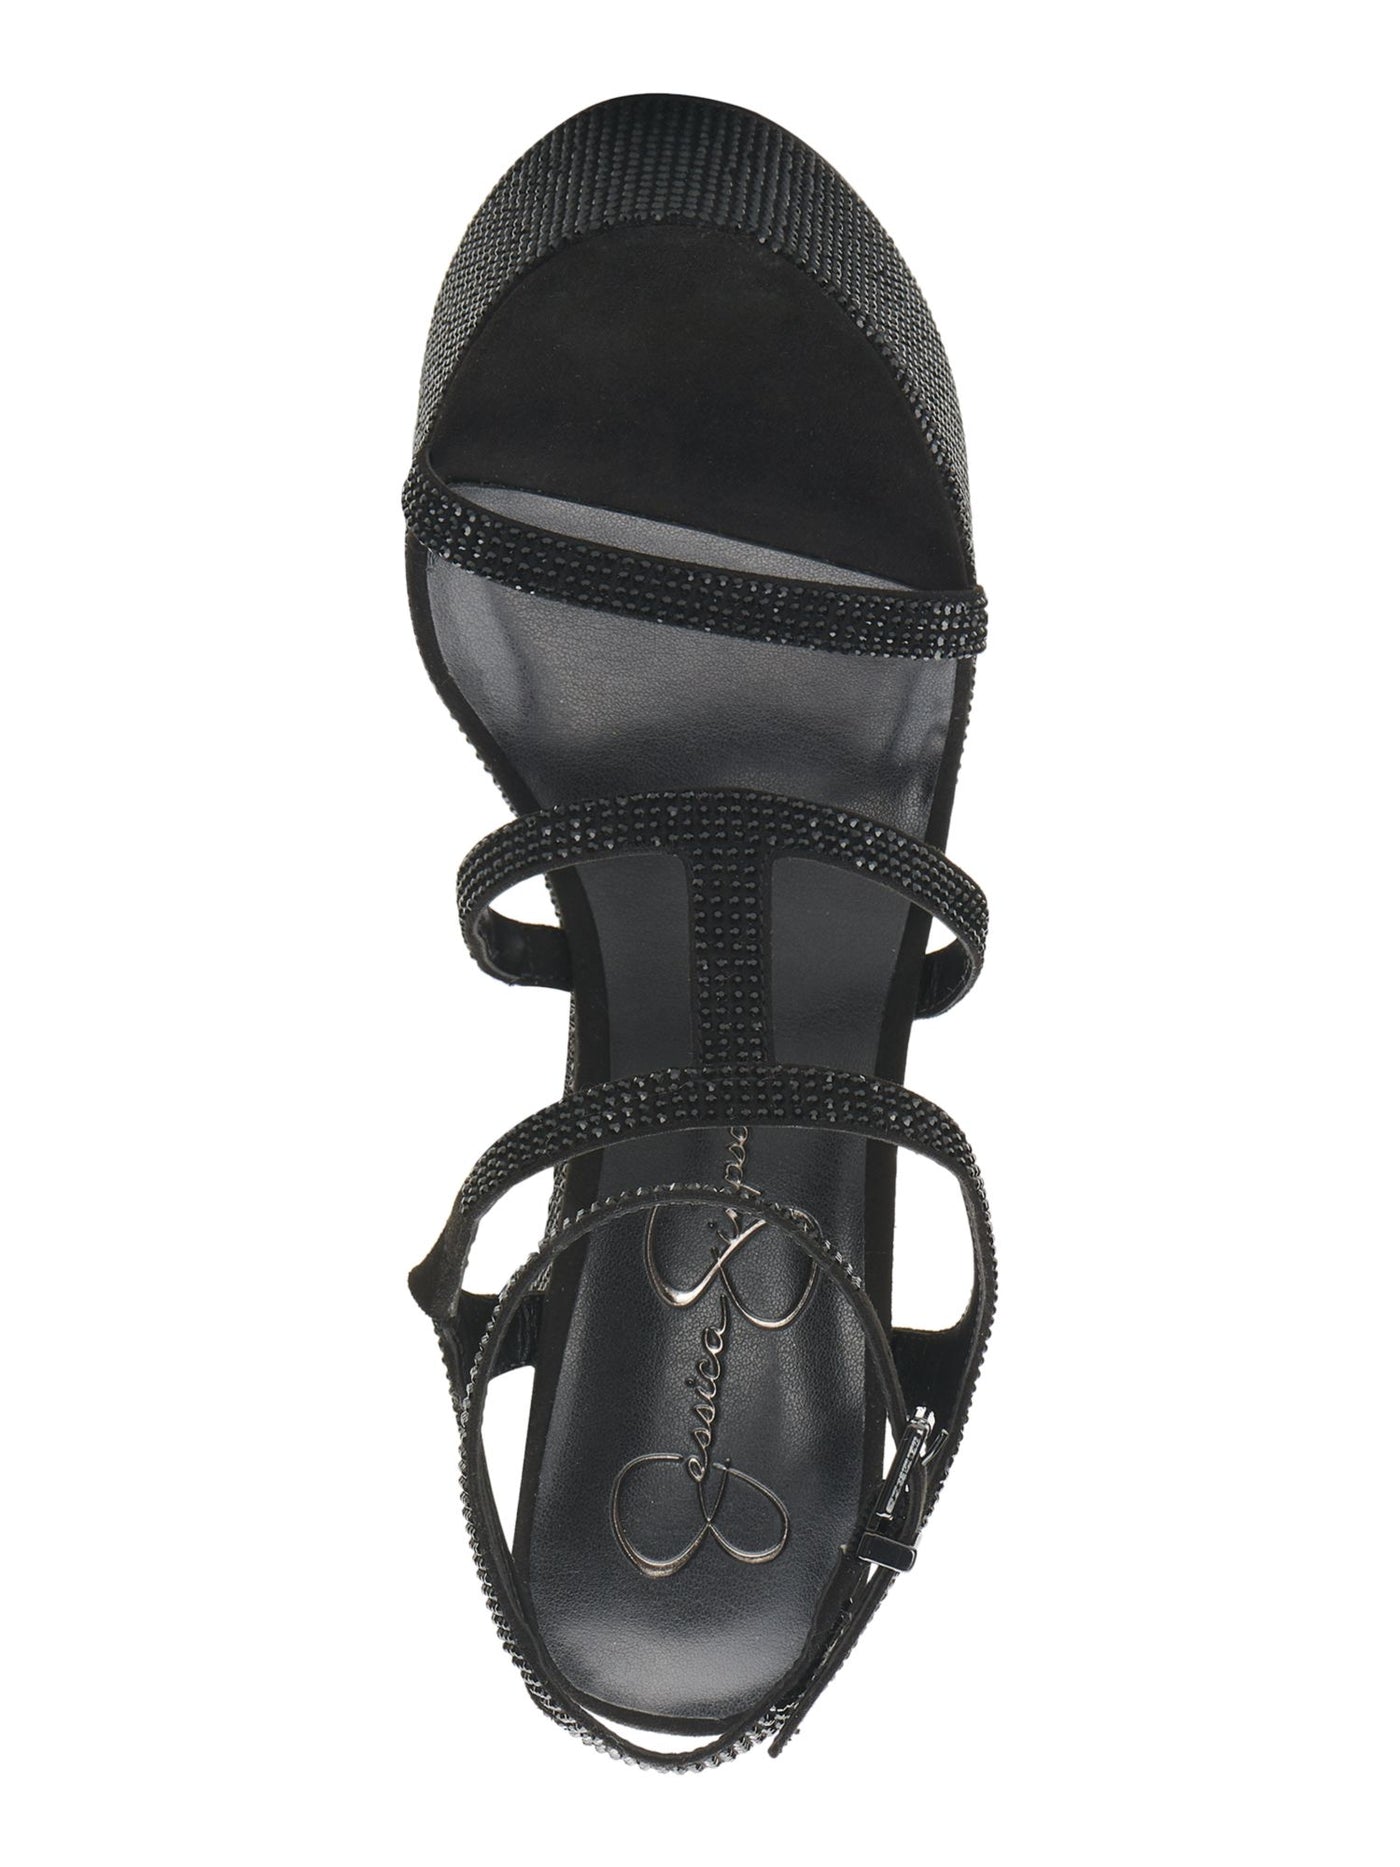 JESSICA SIMPSON Womens Black Mixed Media Padded Strappy Ankle Strap Embellished Meitini Round Toe Platform Buckle Dress Heeled Sandal 10 M